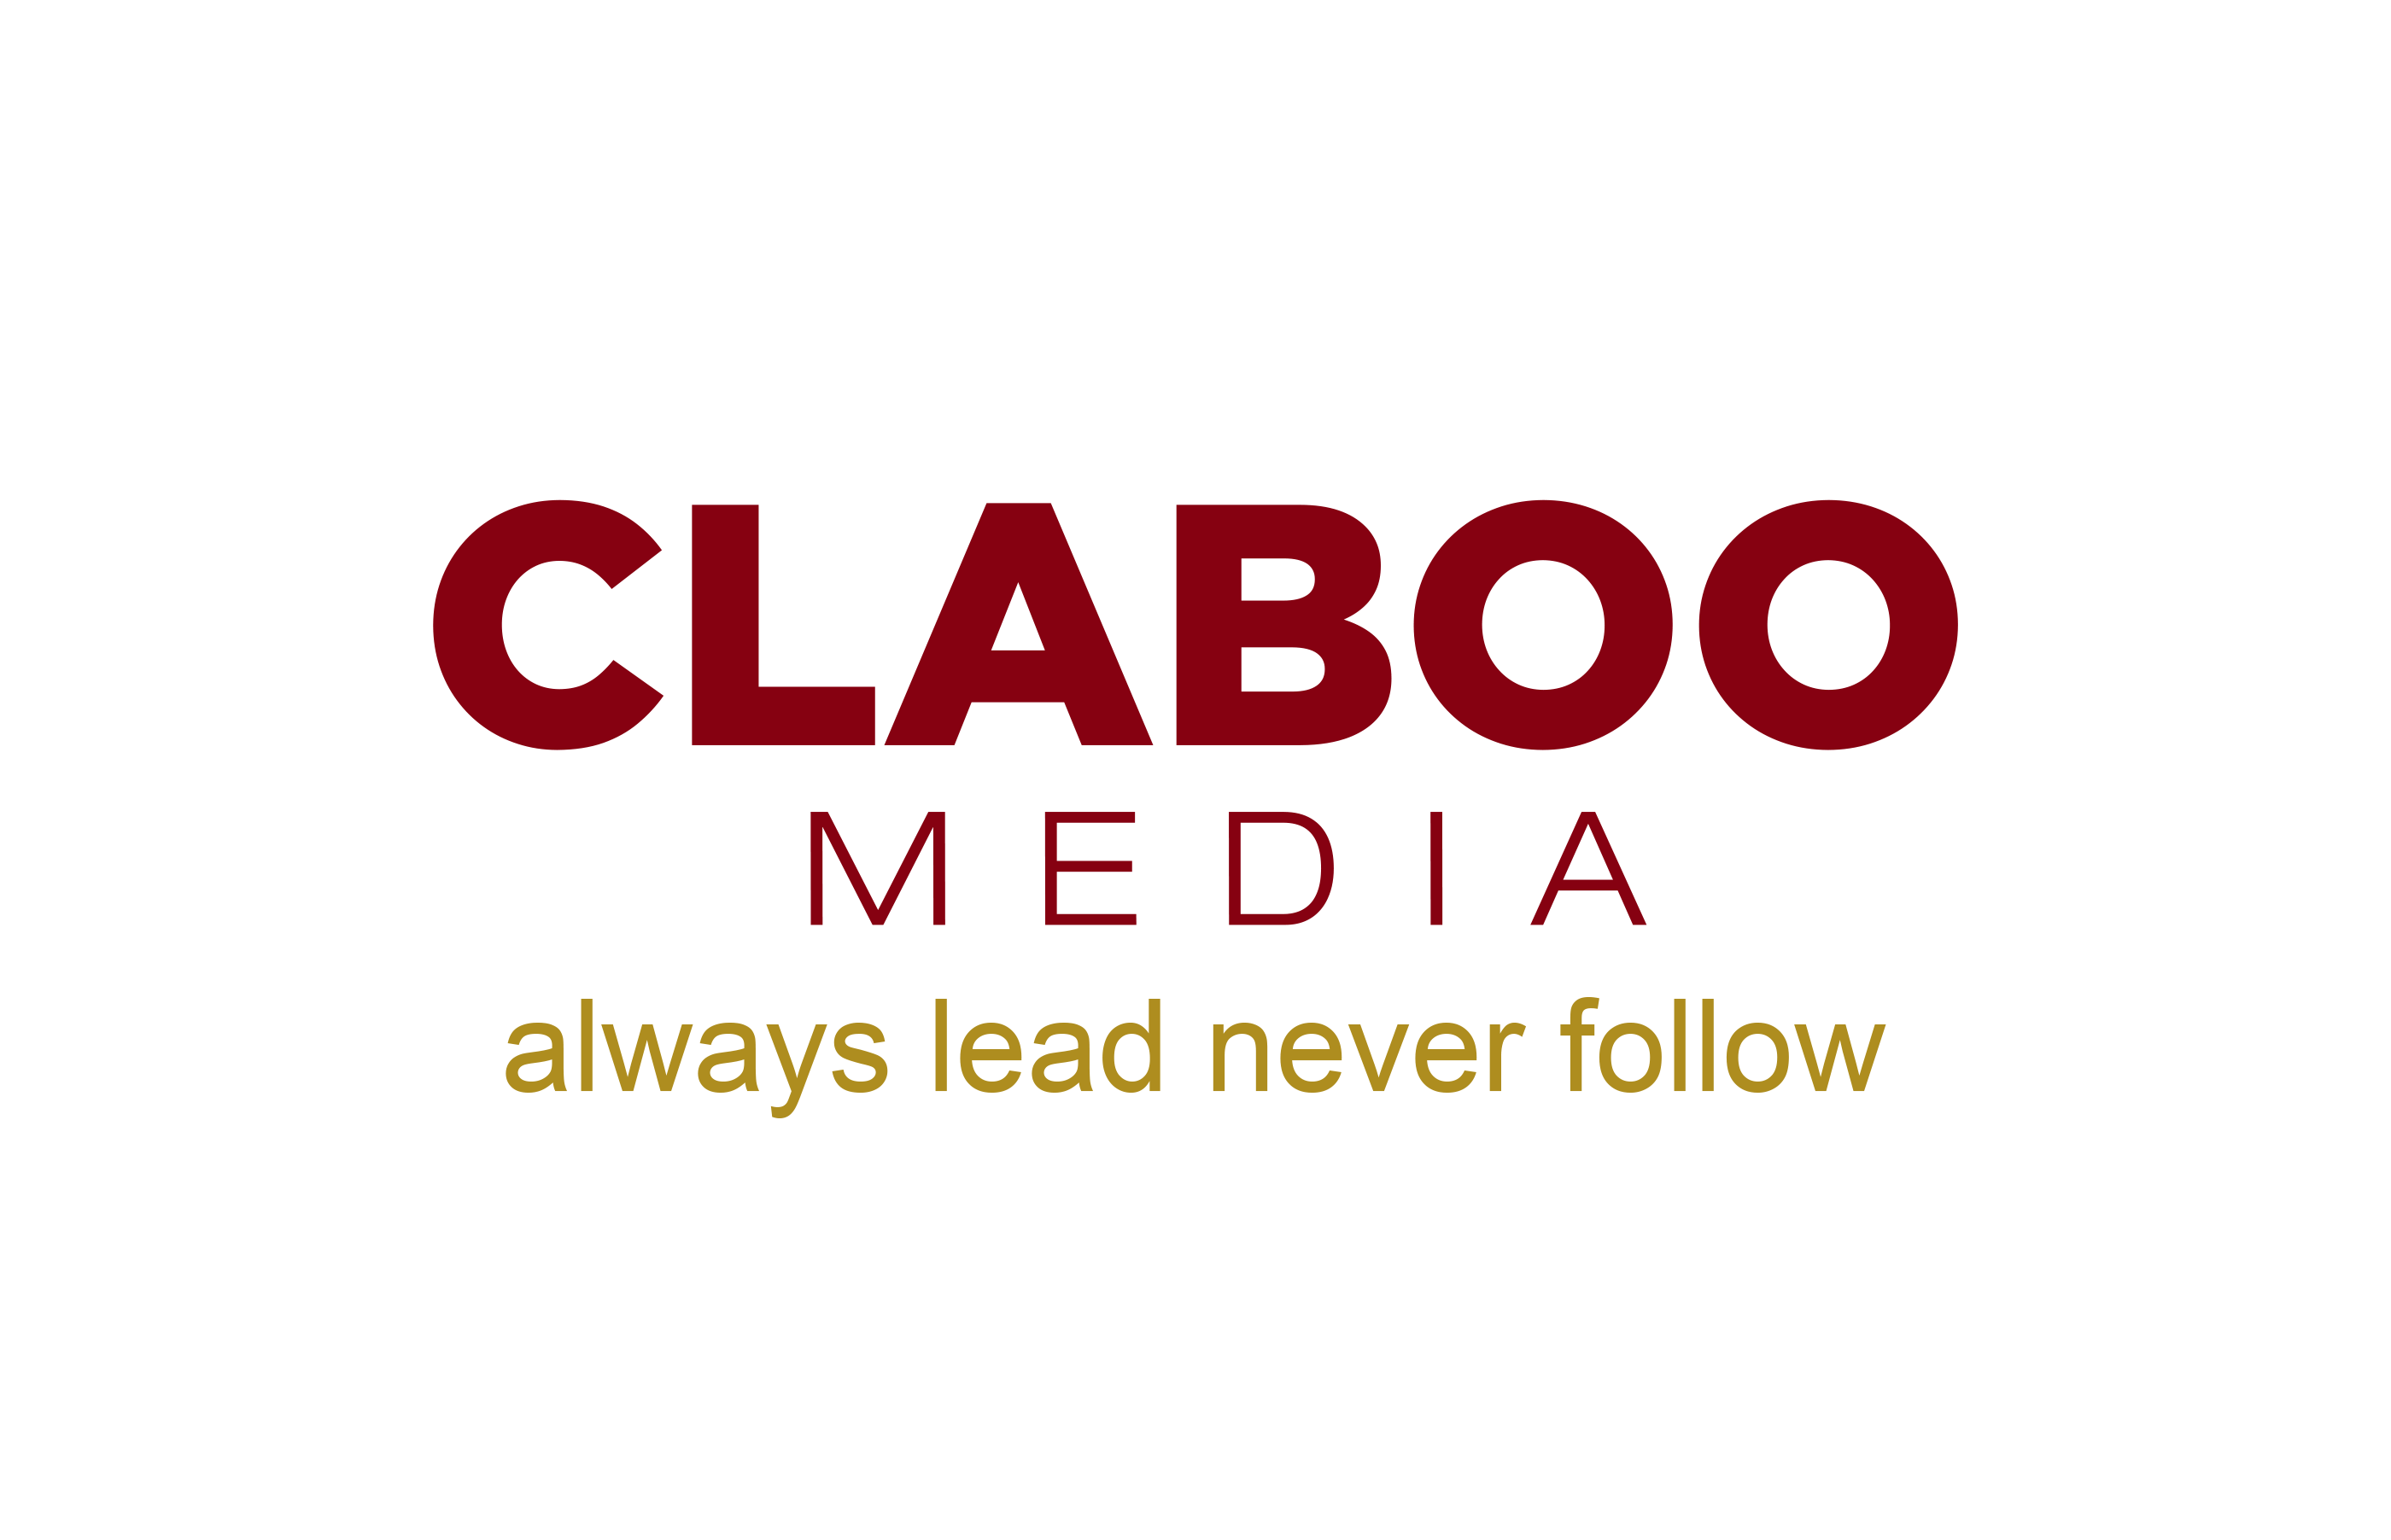 Claboo Media